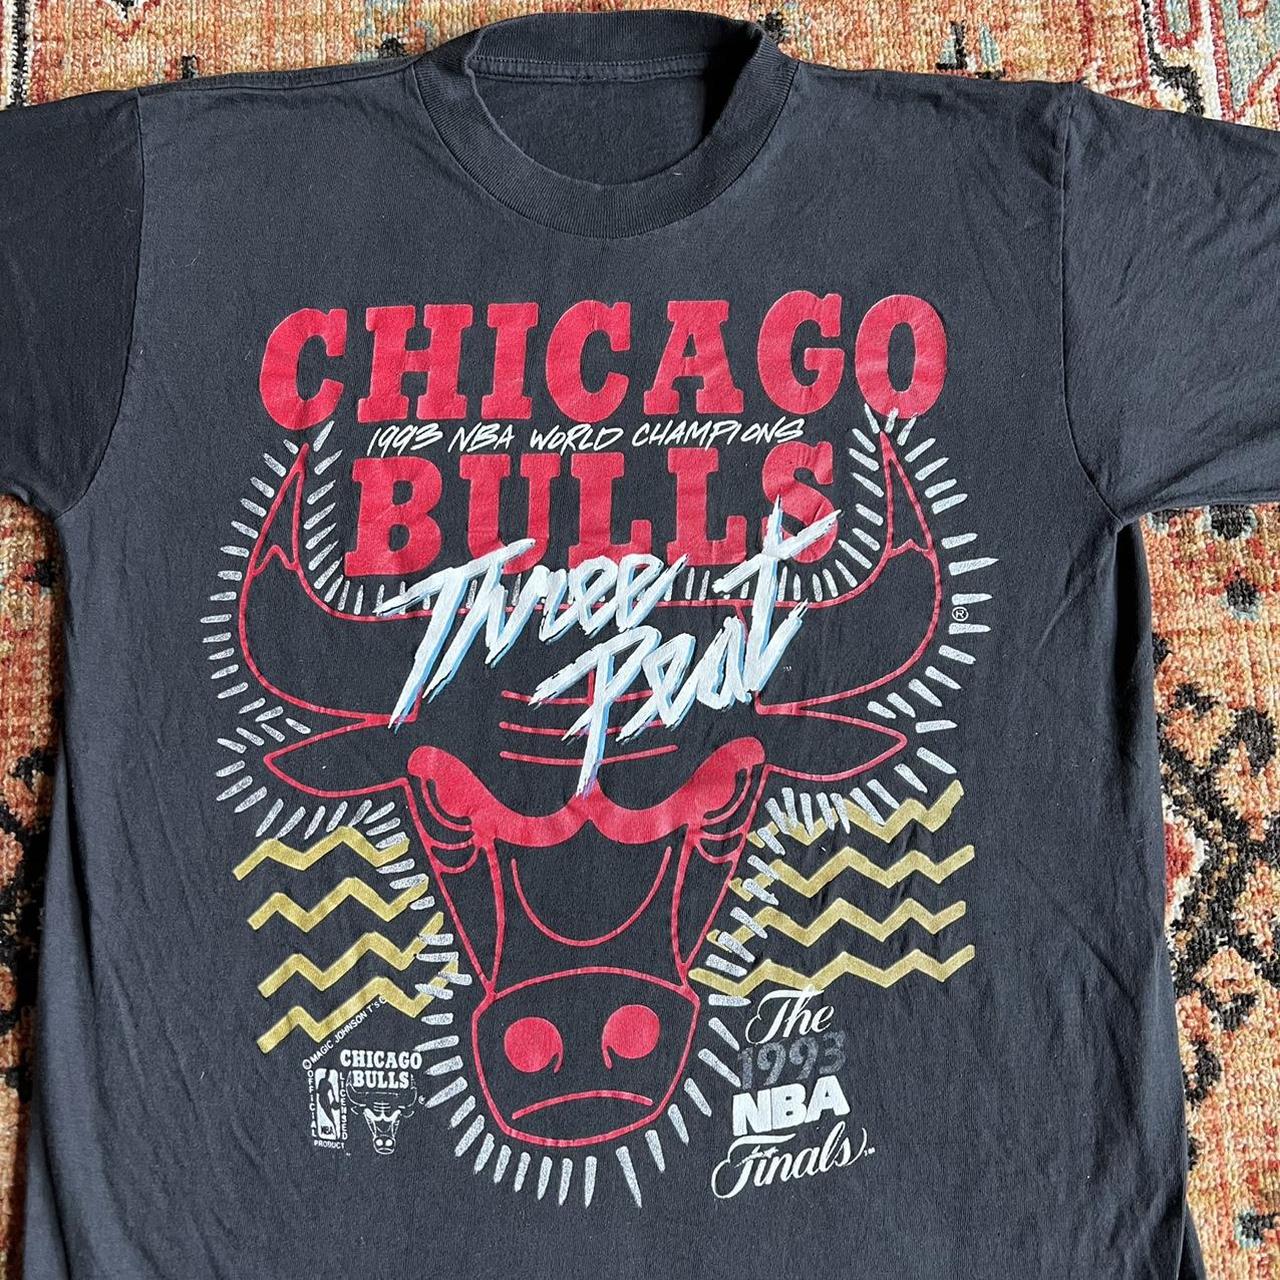 Vintage 90s Chicago bulls 3 peat 1993 nba finals t - Depop